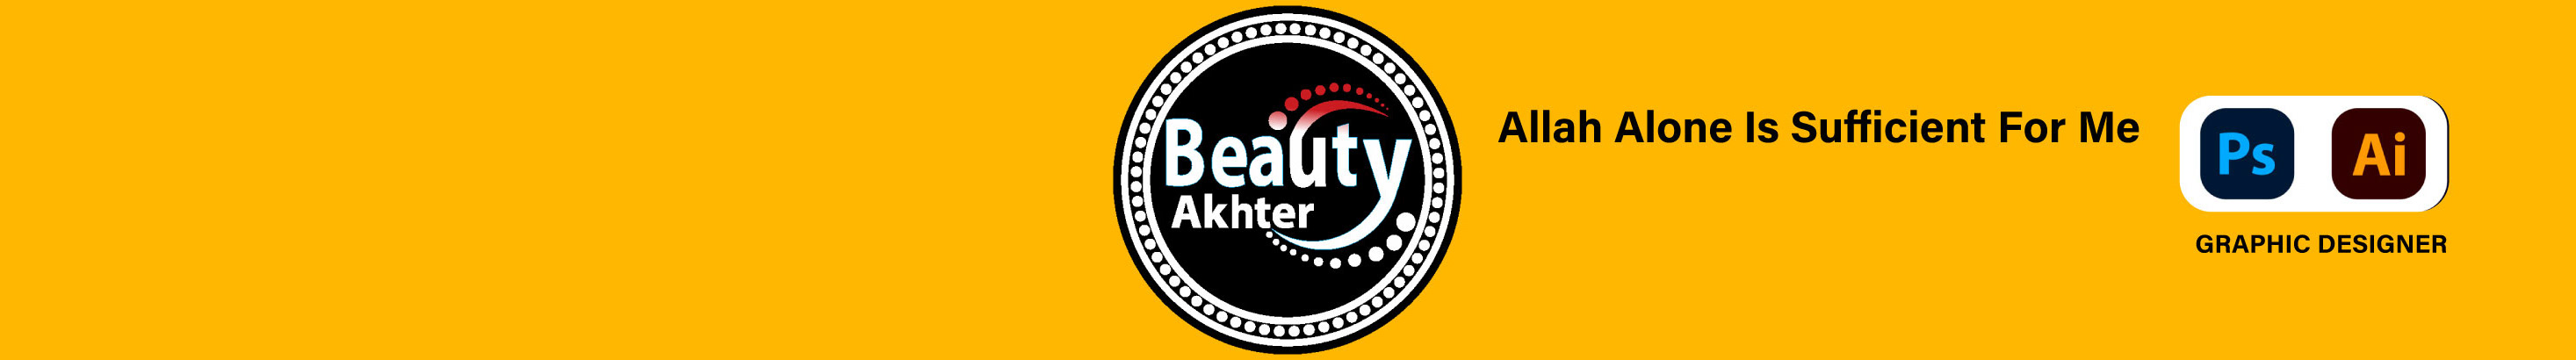 Mst: Beauty Akhters profilbanner